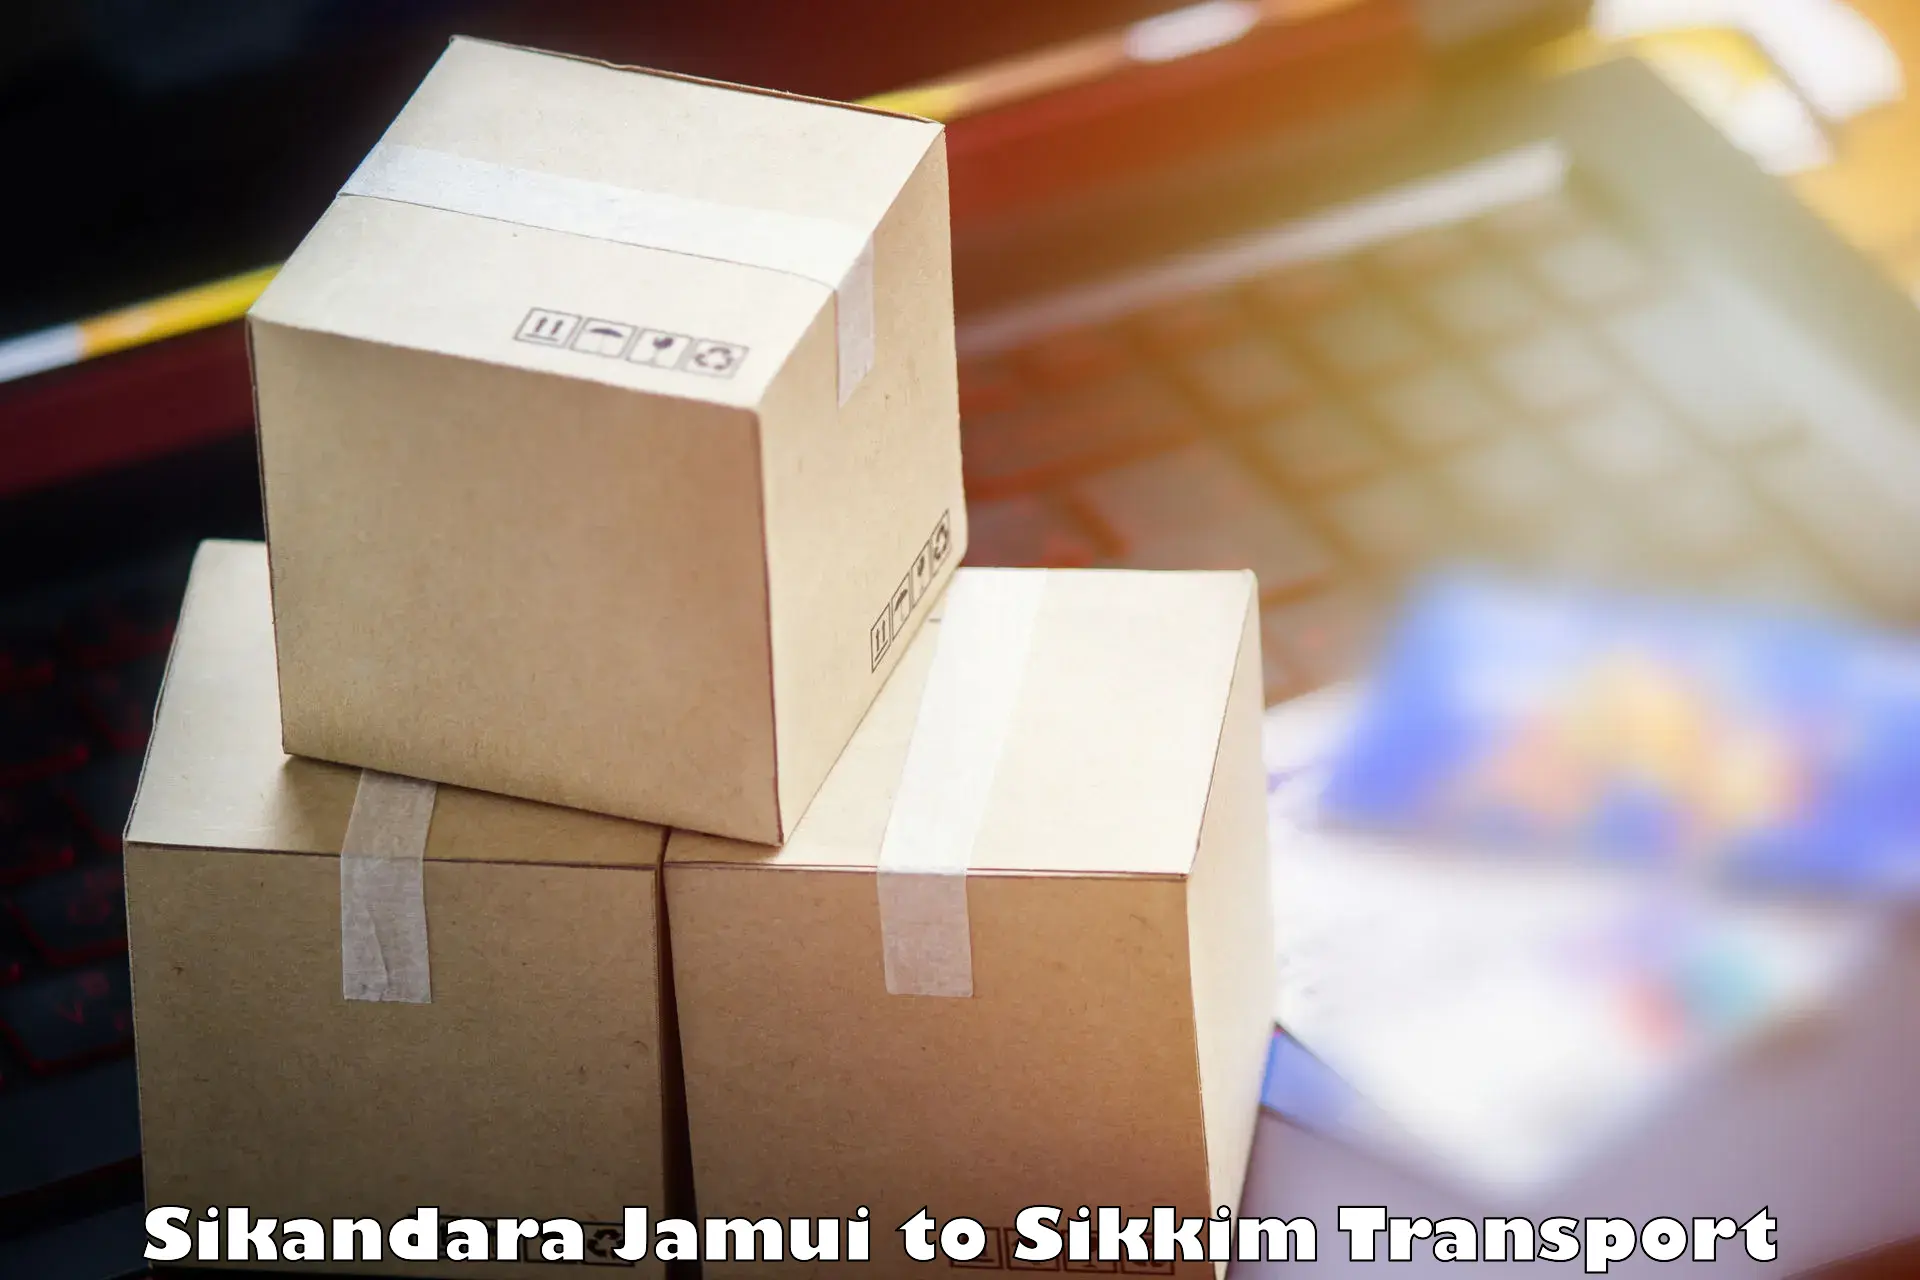 Transport in sharing Sikandara Jamui to South Sikkim